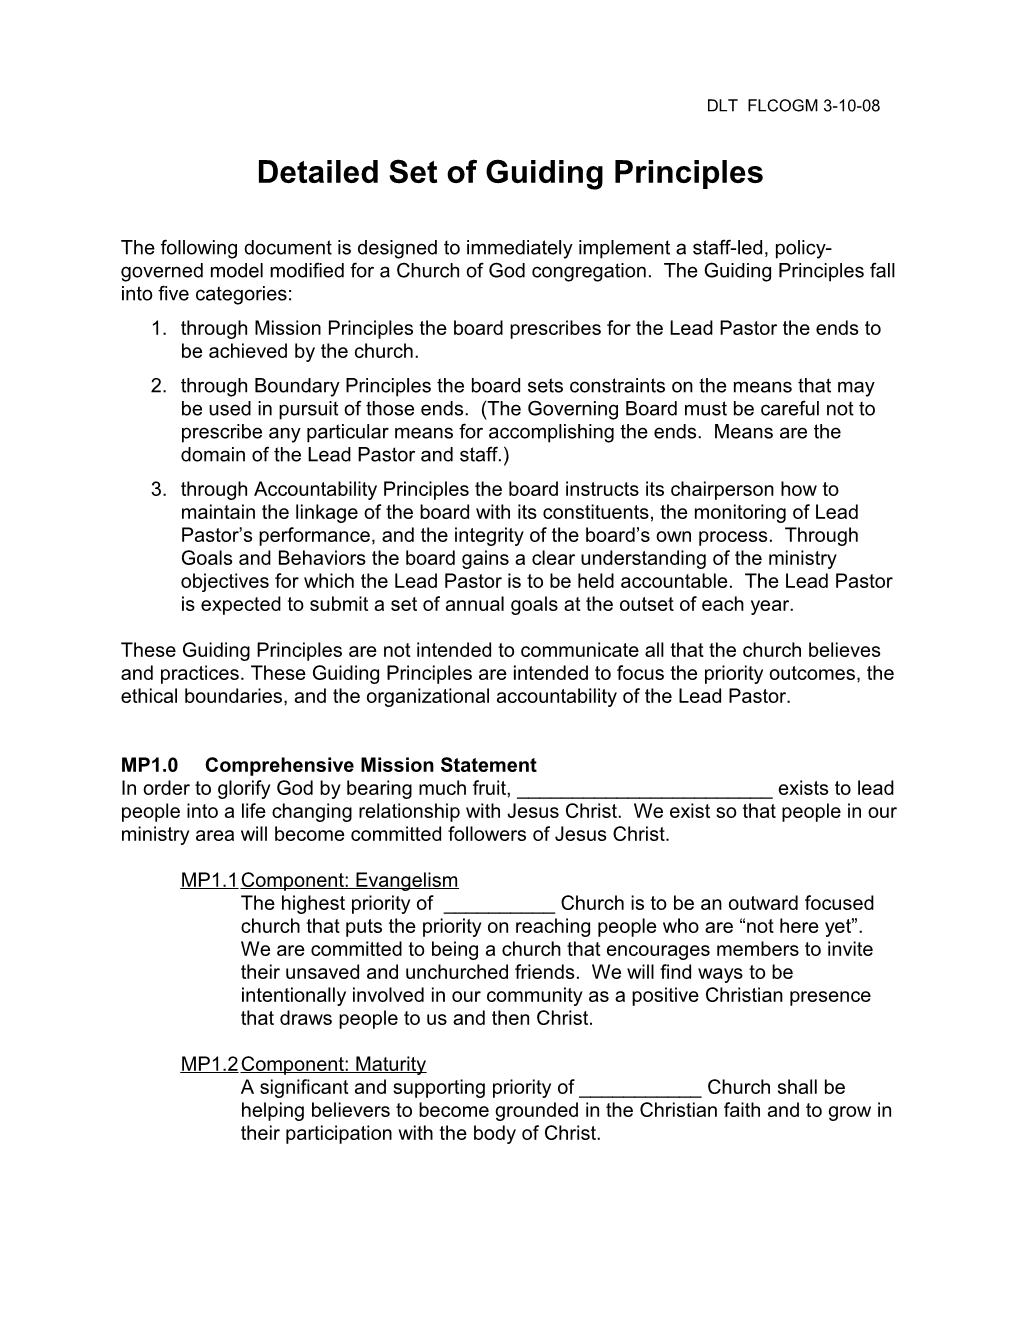 Boilerplate Set of Guiding Principles